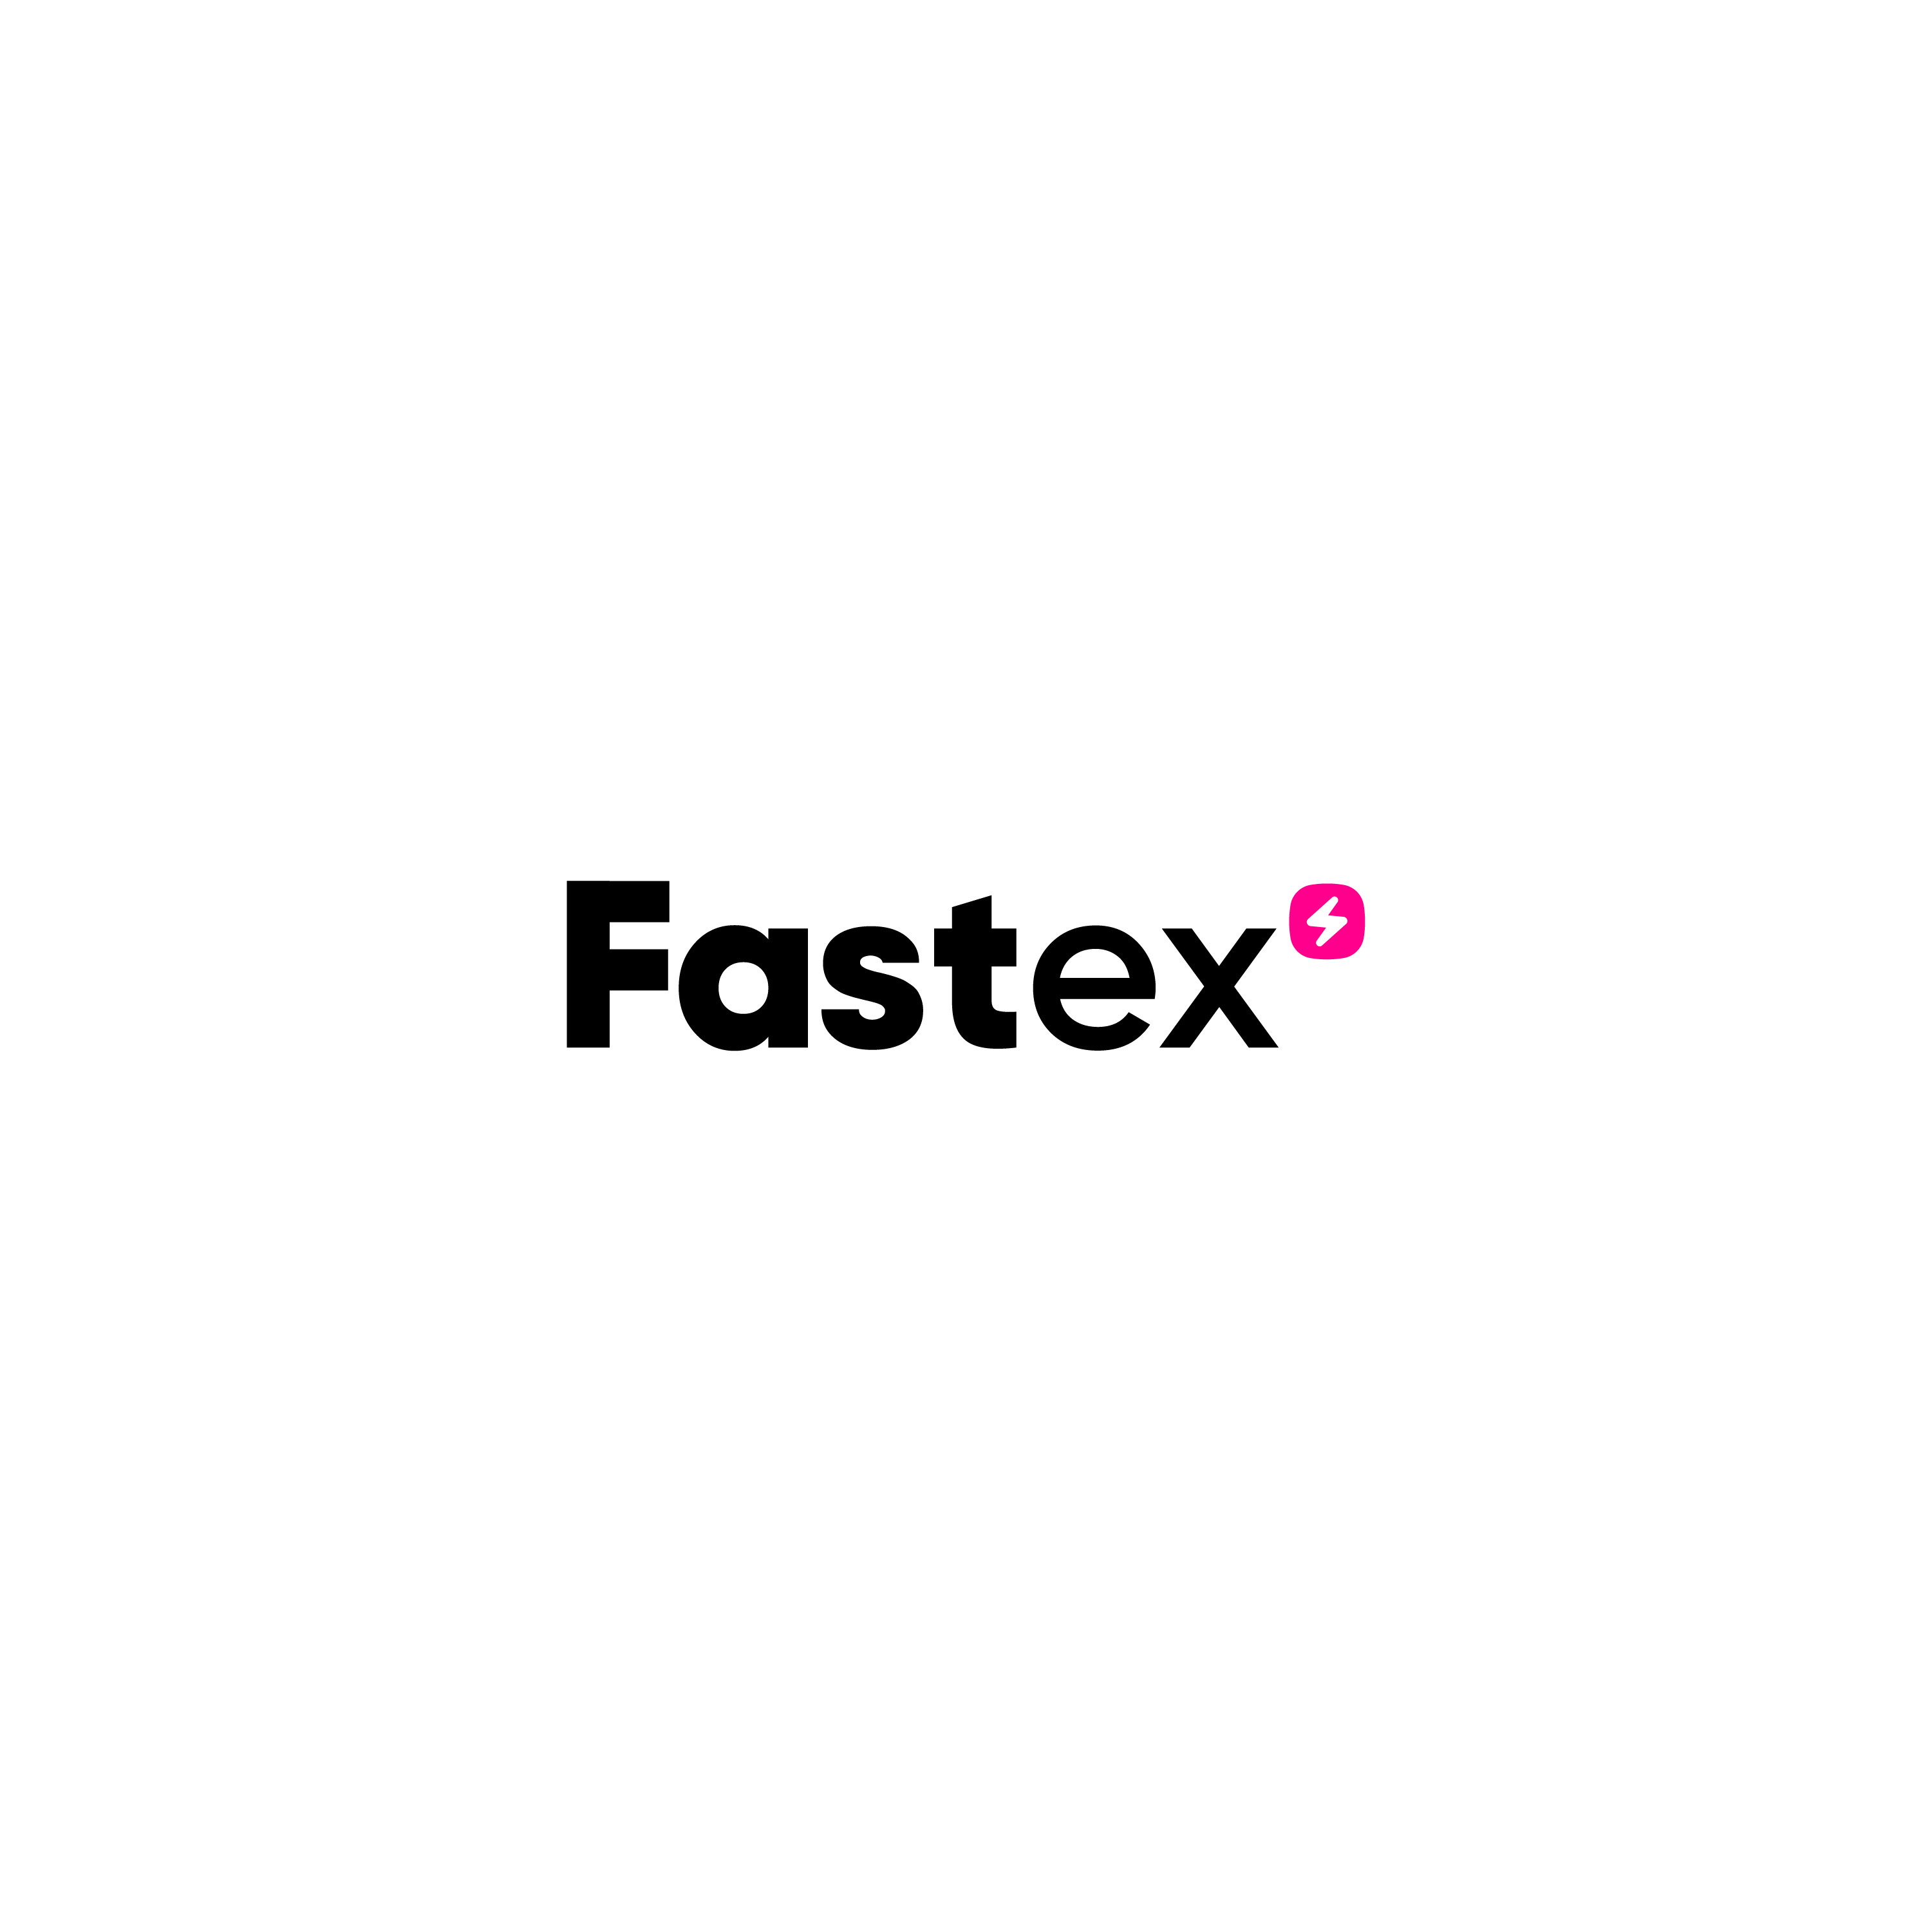 (c) Fastex.com